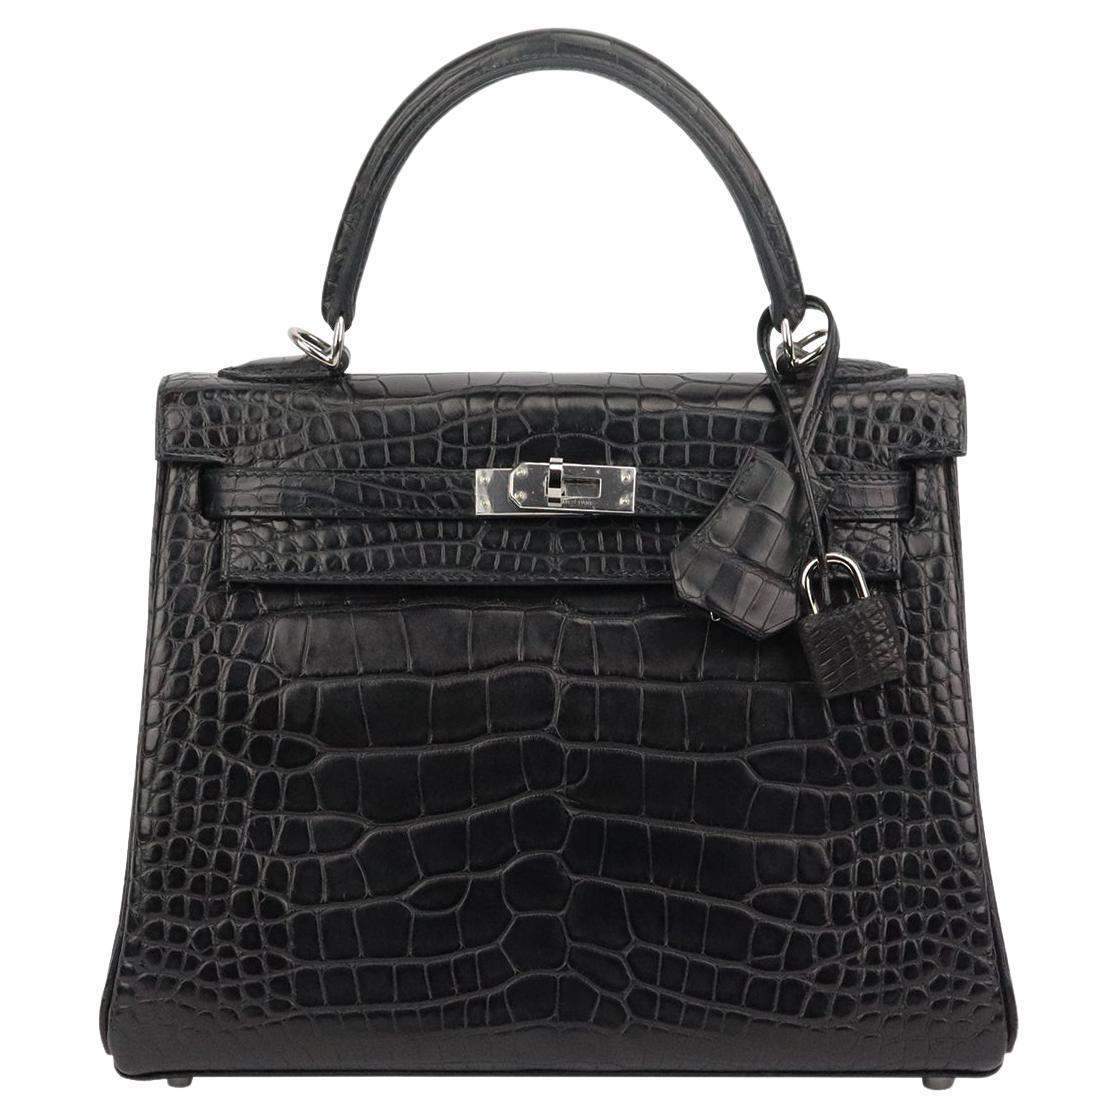 Hermès 2018 Kelly 25cm Matte Alligator Mississippiensis Leather Bag